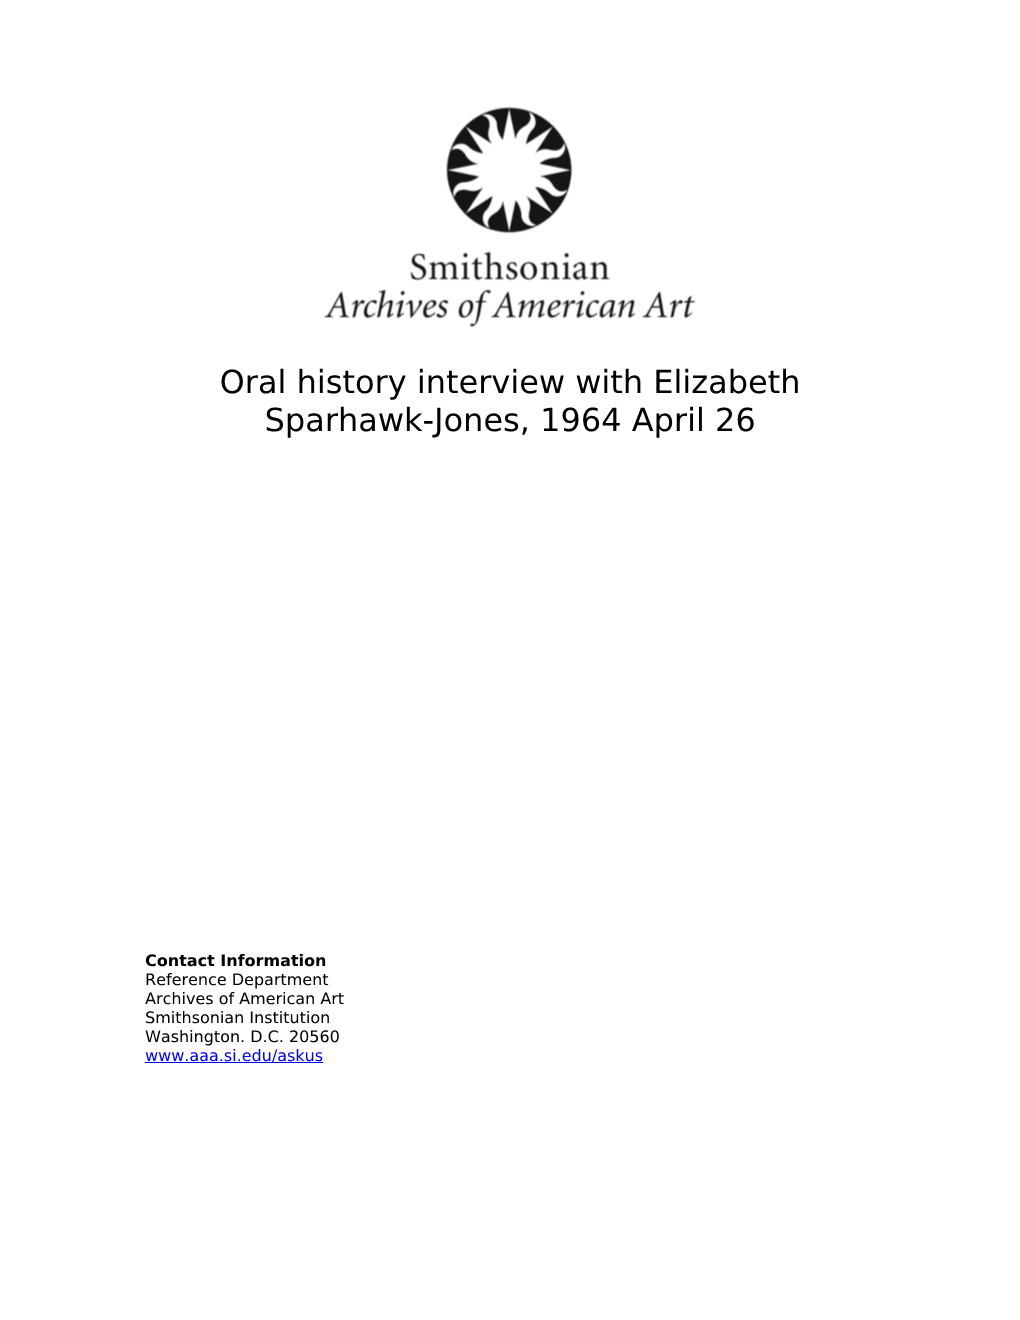 Oral History Interview with Elizabeth Sparhawk-Jones, 1964 April 26